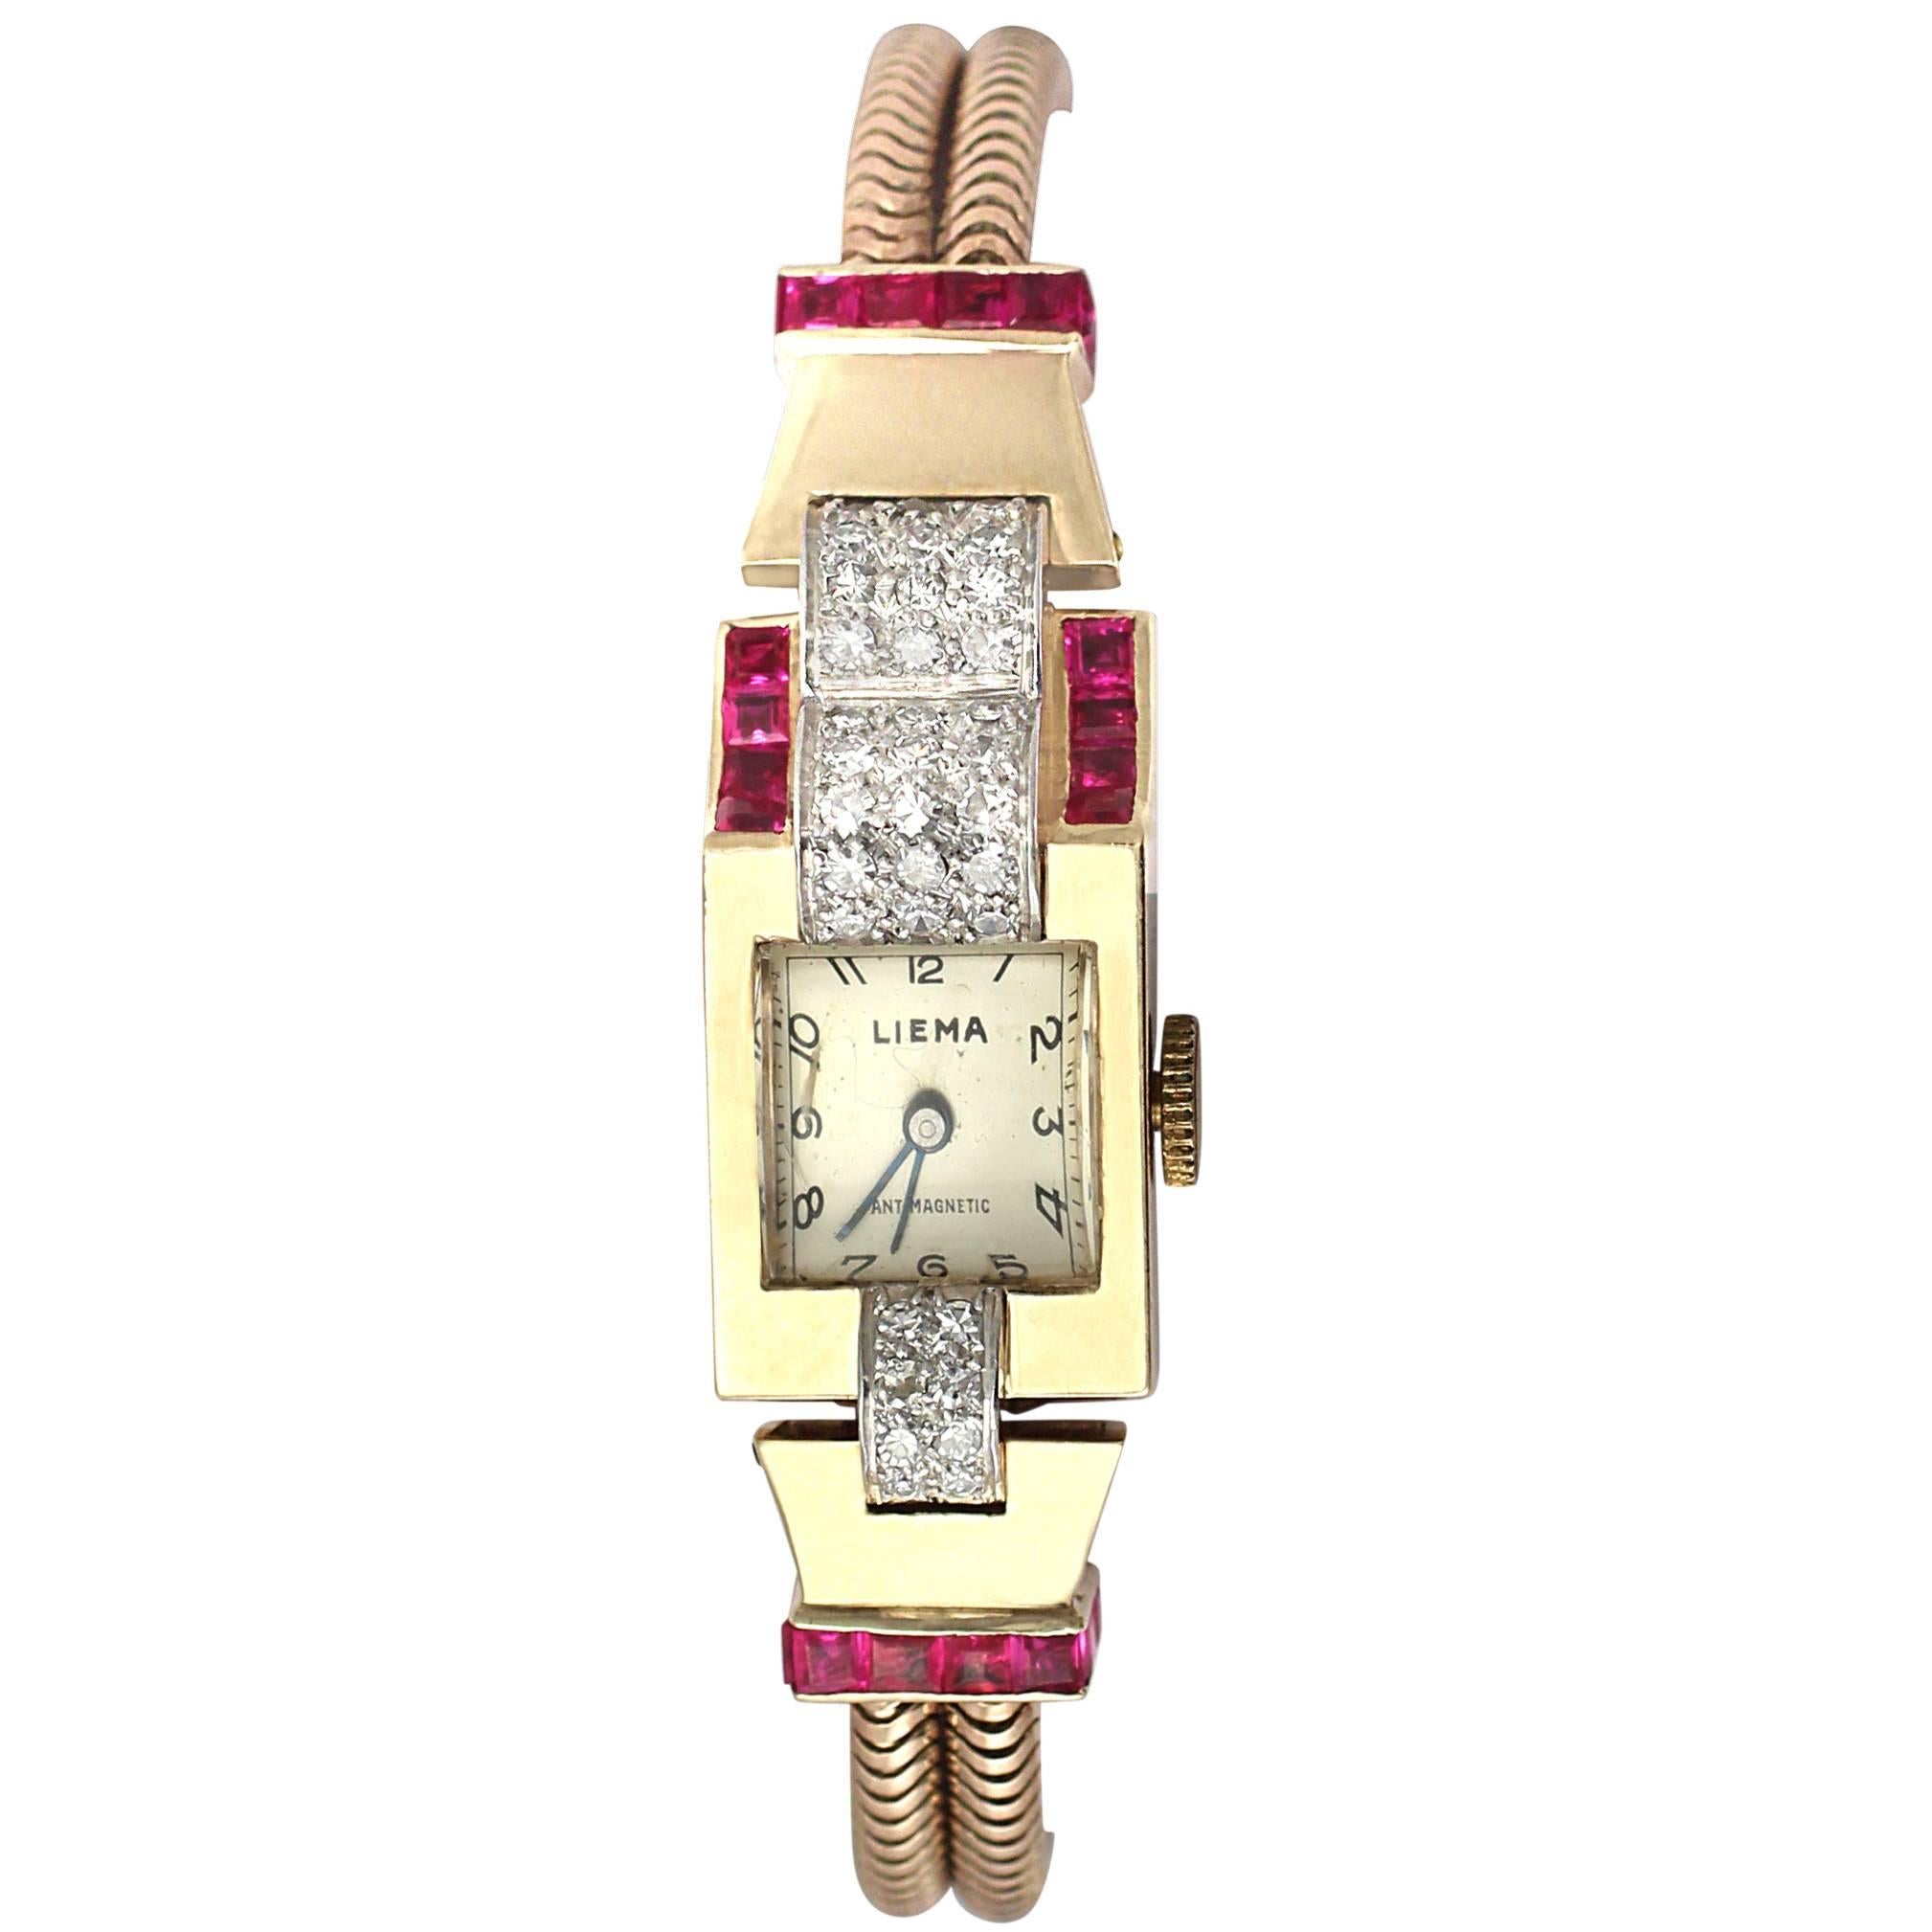 1.11Ct Diamond & 0.55Ct Ruby, 9k Yellow Gold Watch - Art Deco Style - Vintage